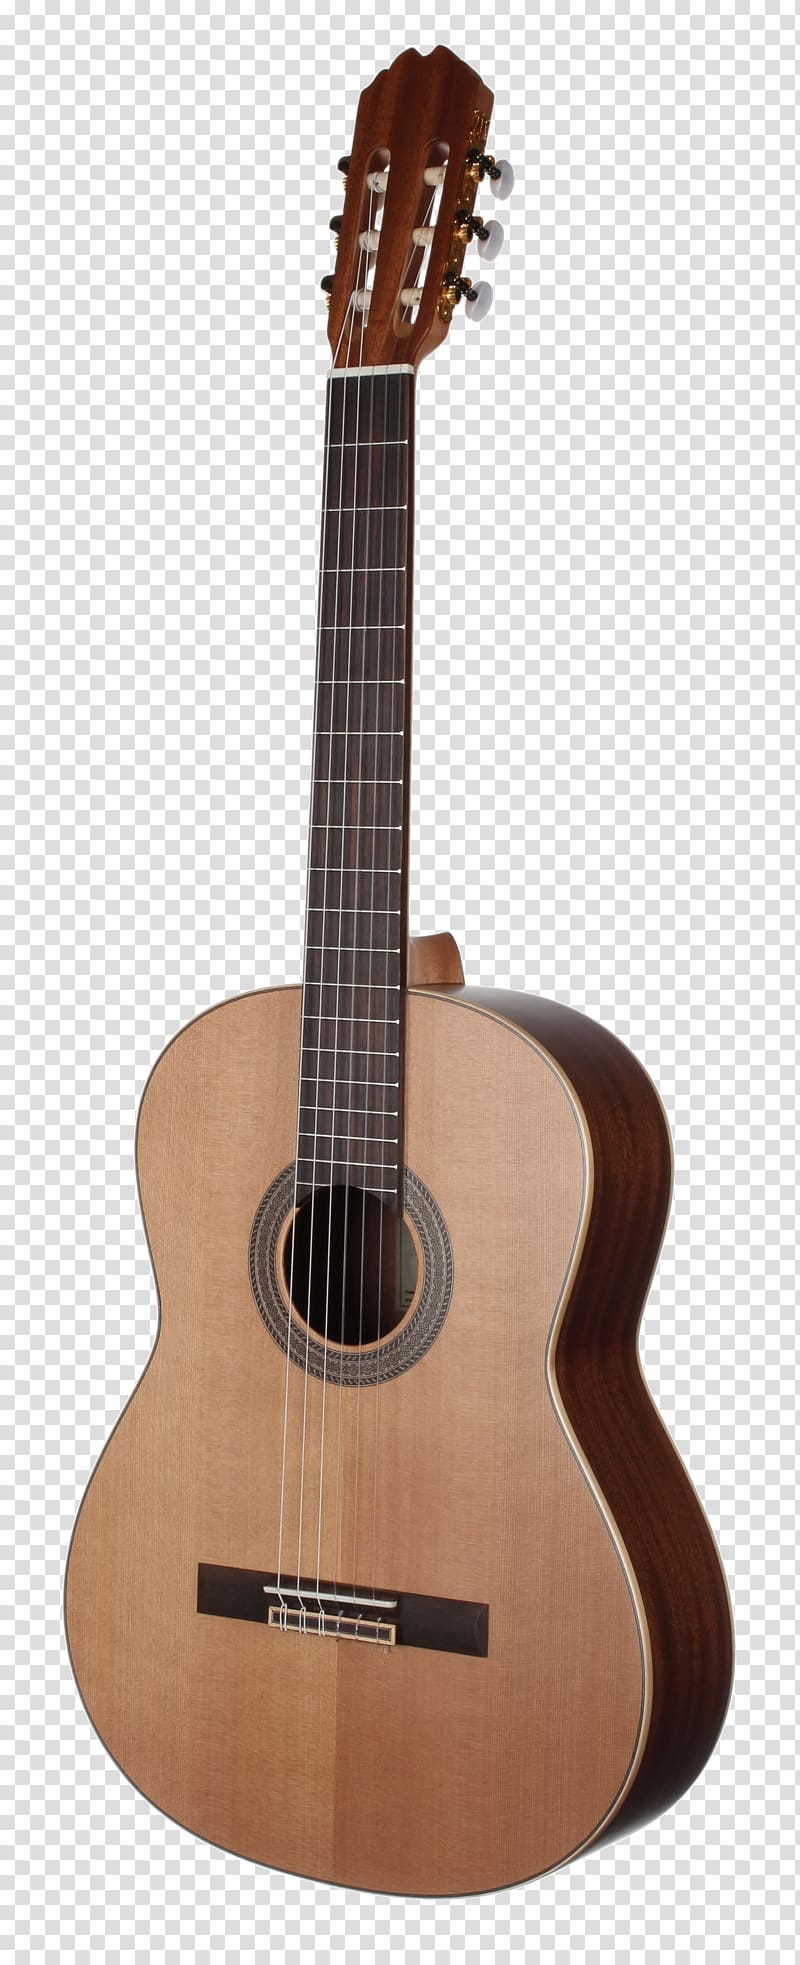 Acoustic guitar Bass guitar Tiple Cuatro Cavaquinho, Acoustic Guitar transparent background PNG clipart